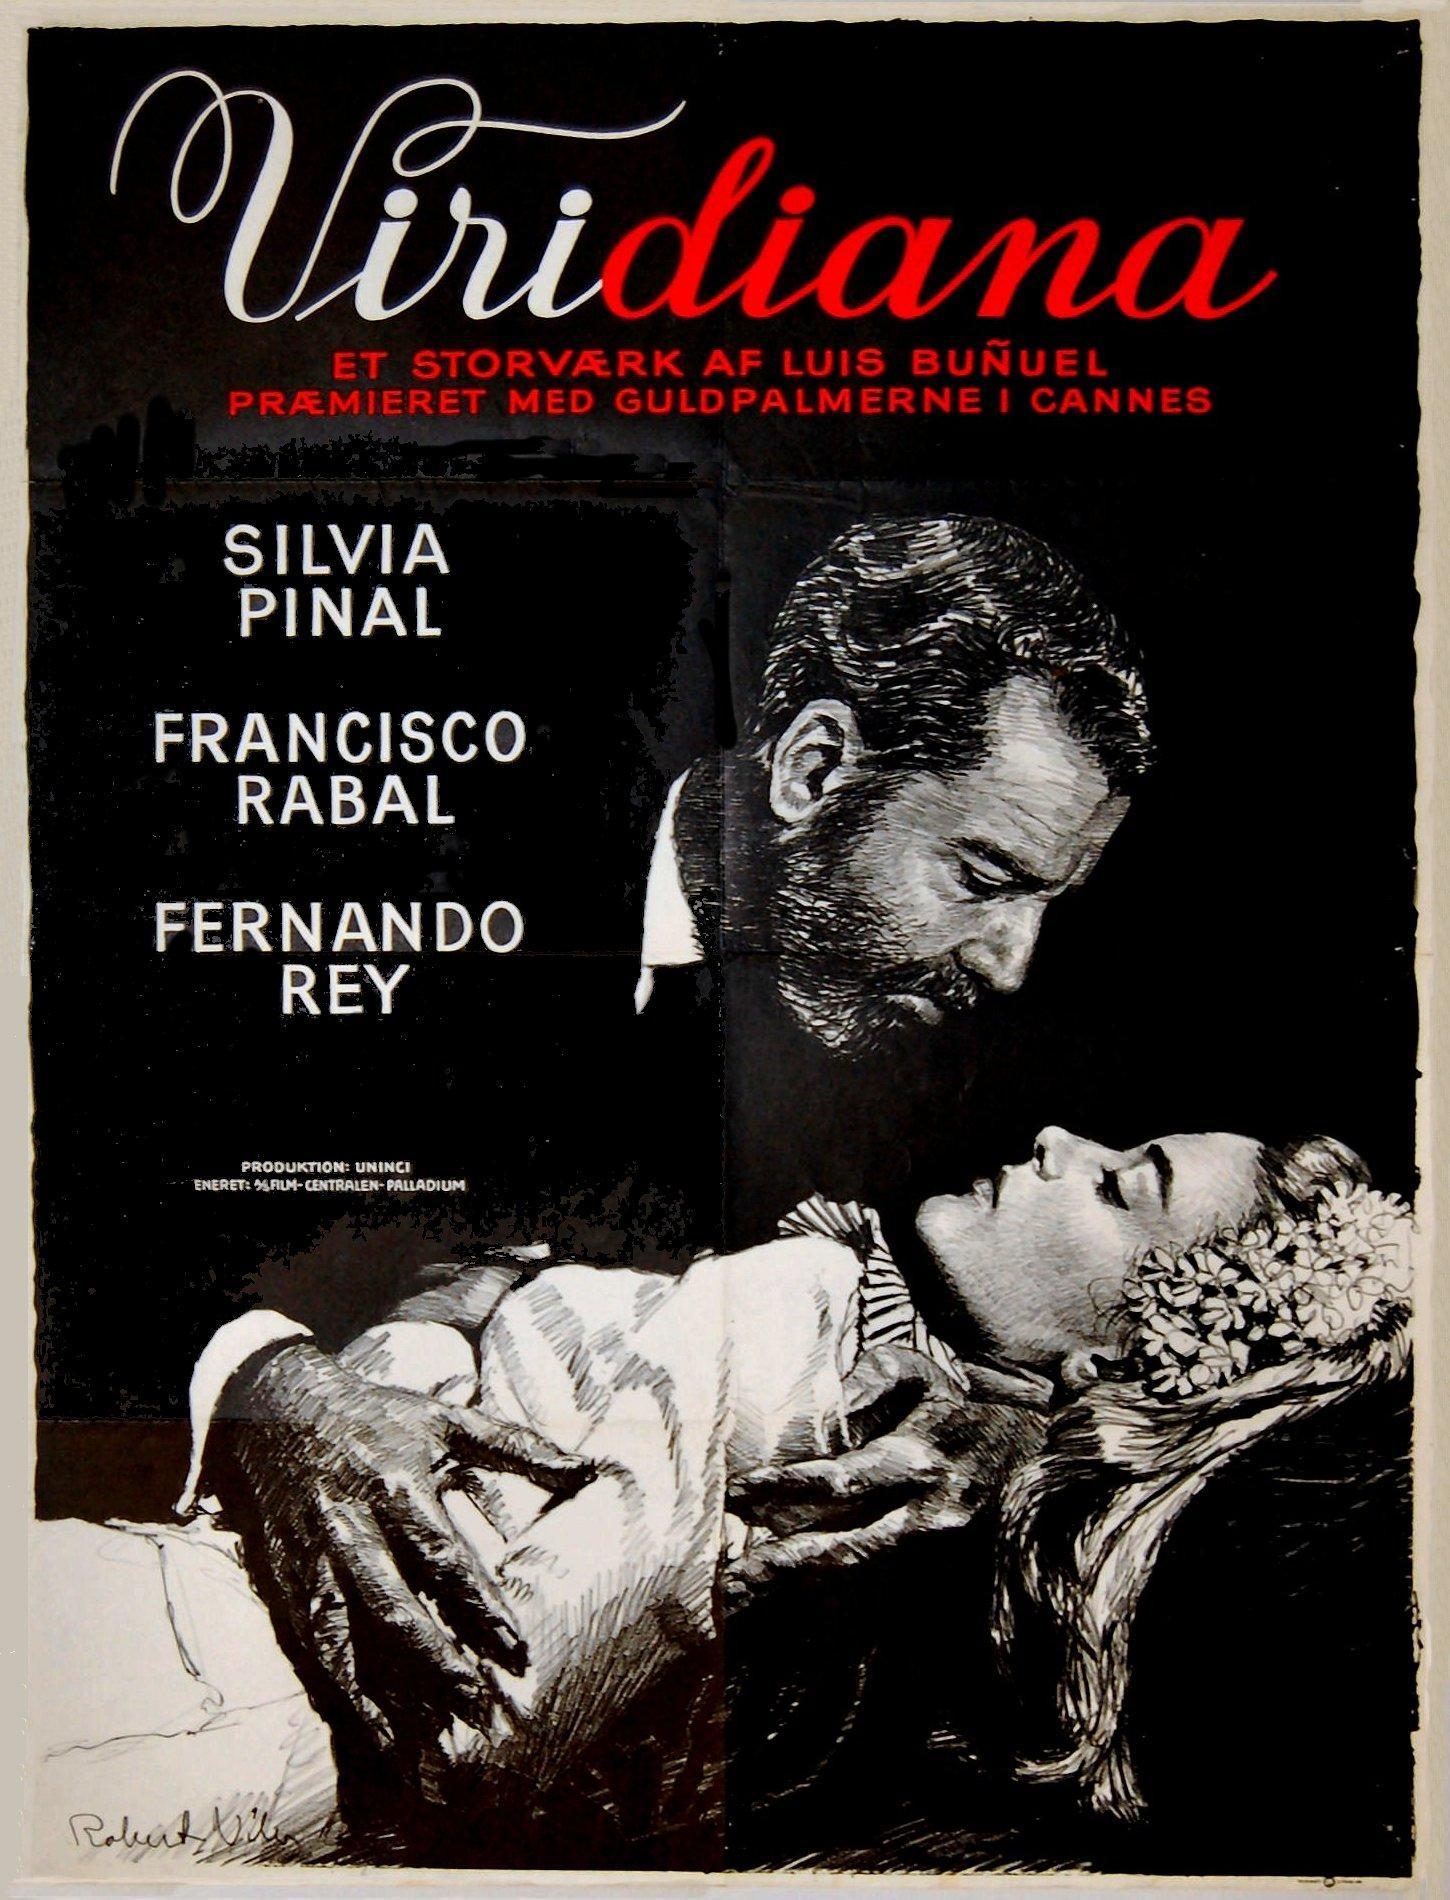 Постер фильма Виридиана | Viridiana